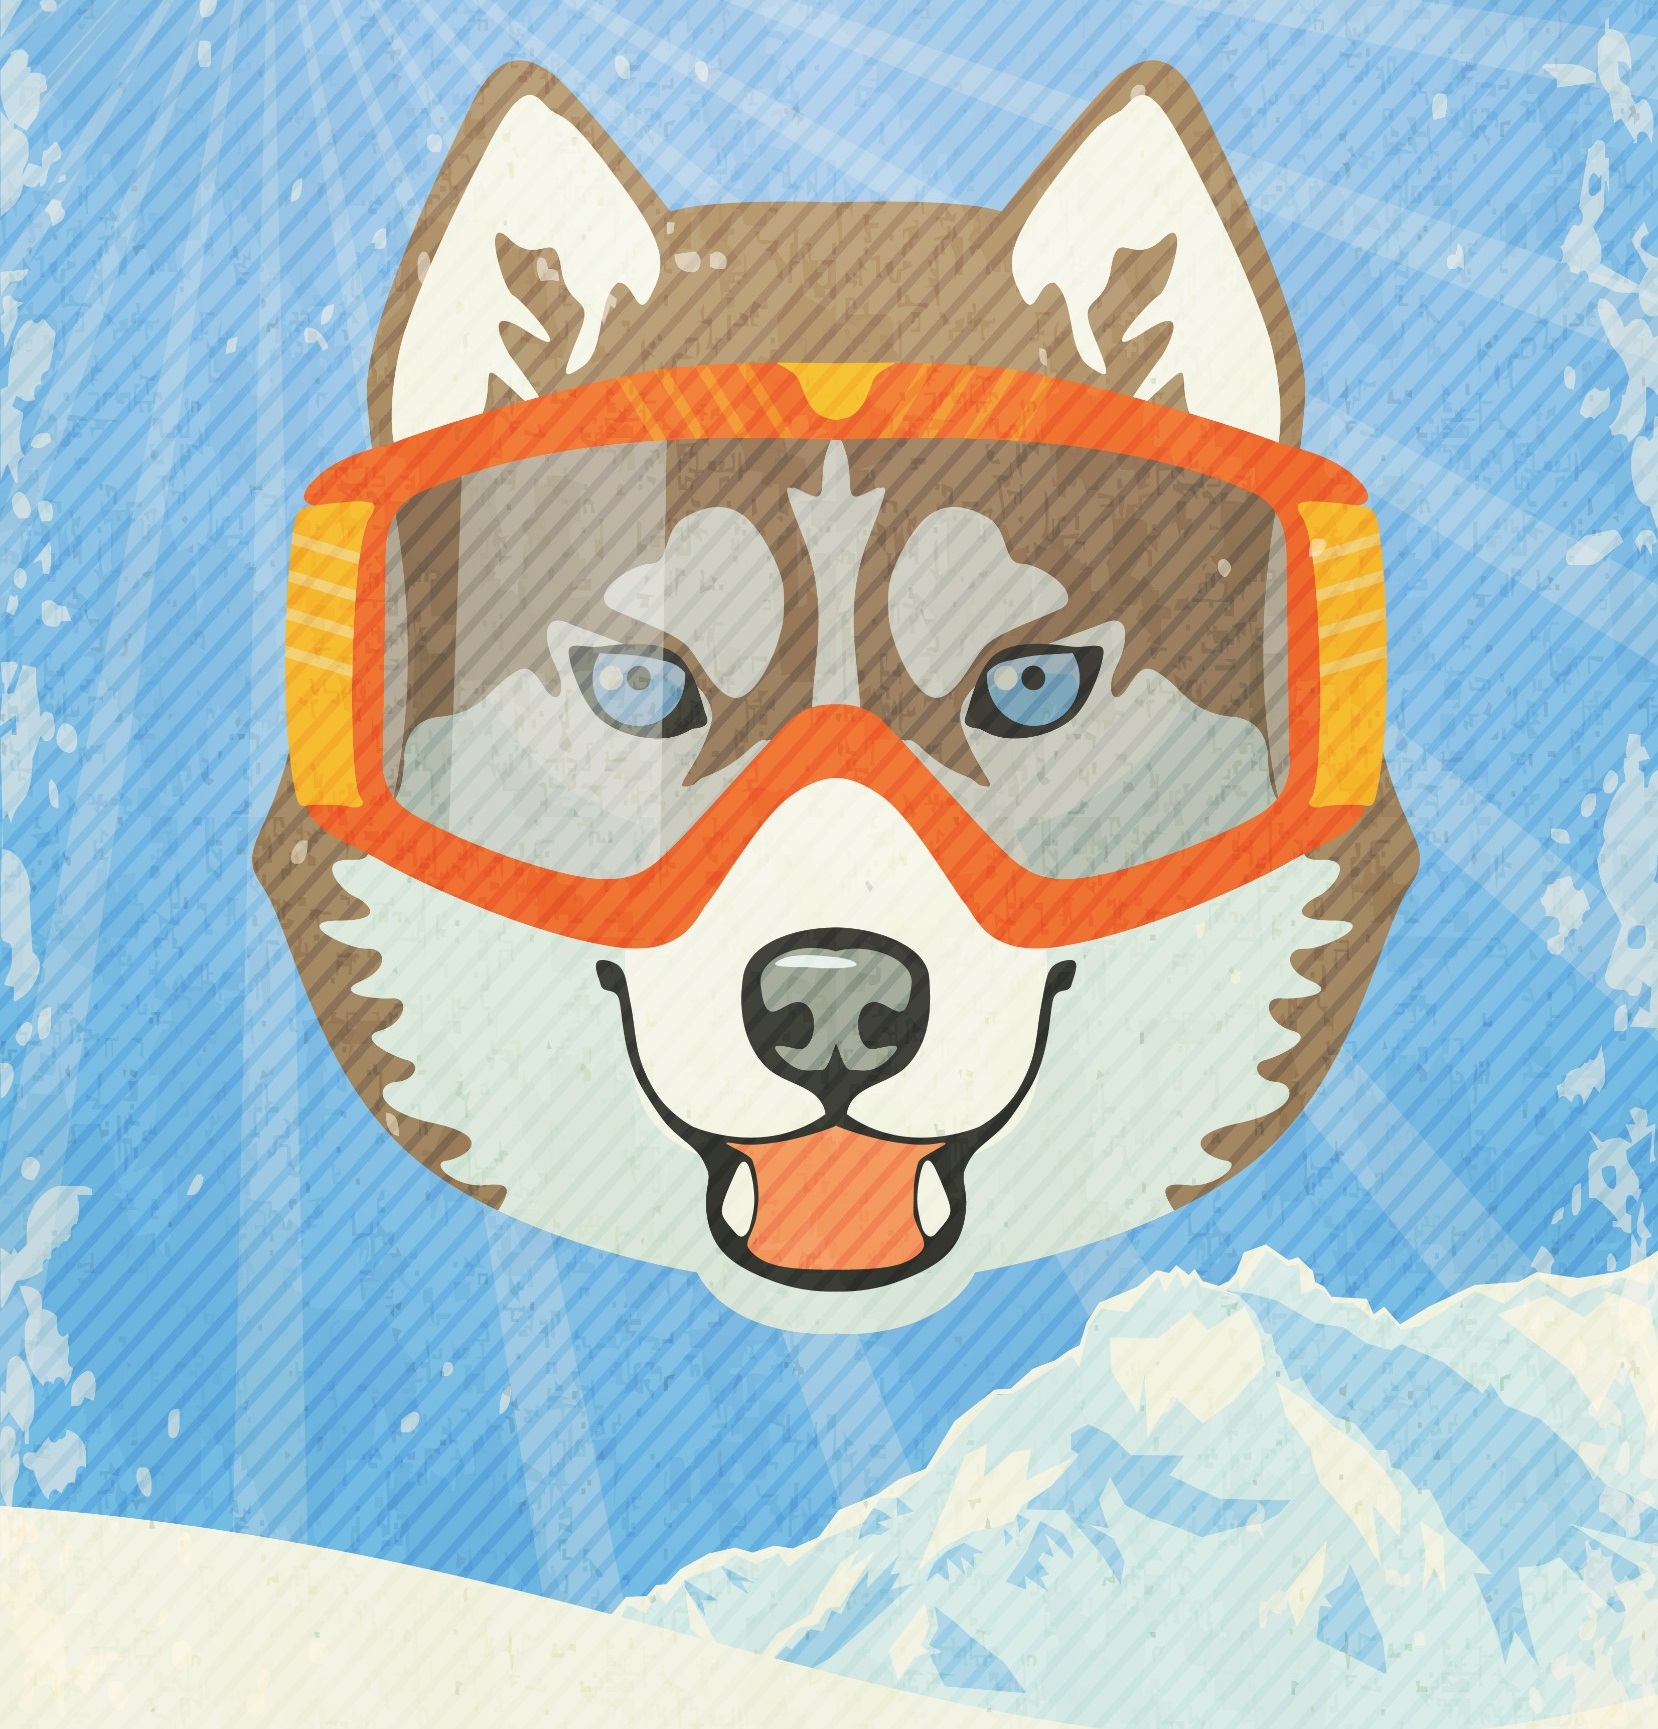 Husky dog wearing ski goggles.